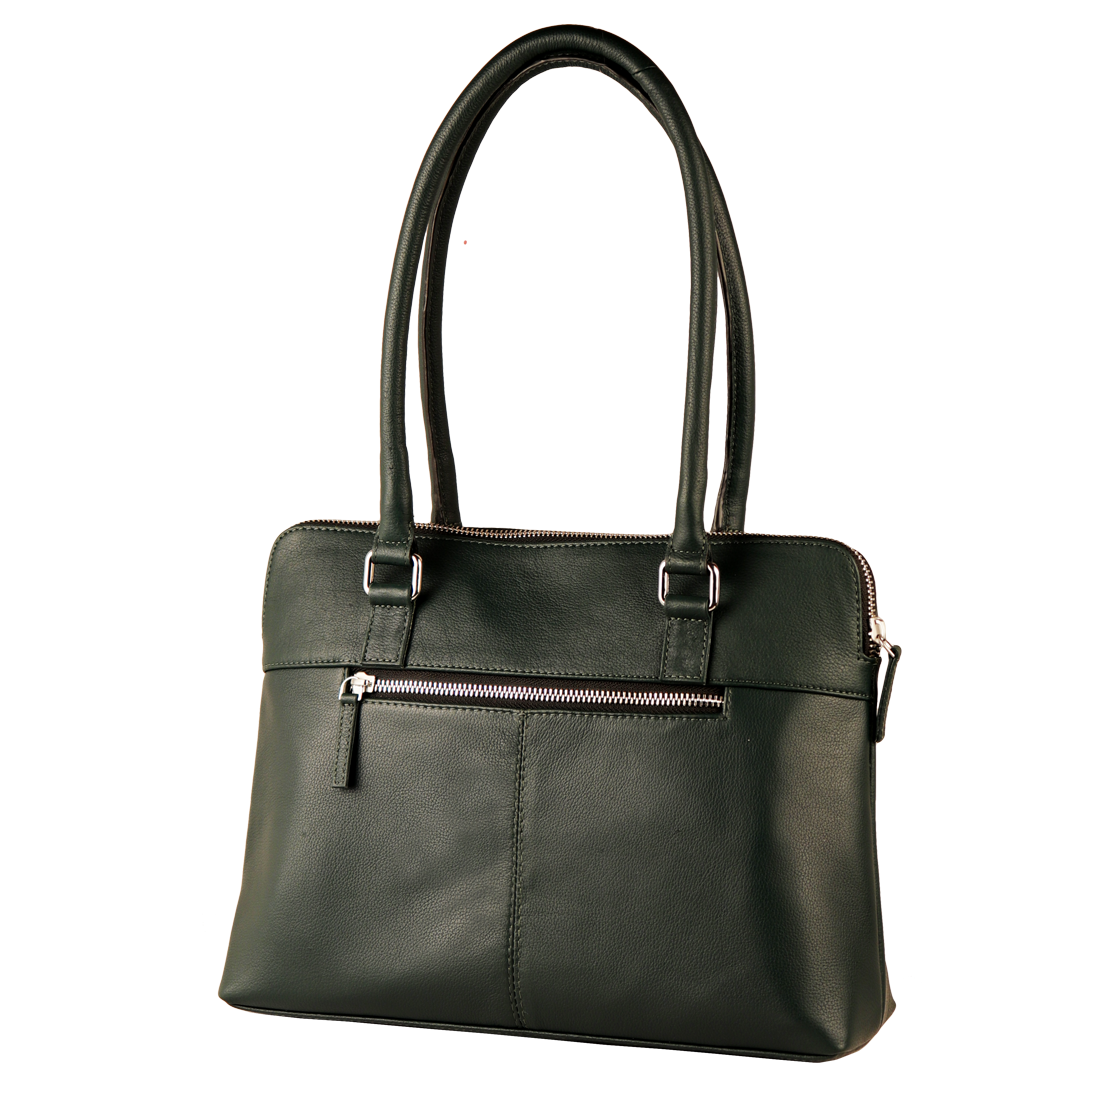 Genuine Leather Handcrafted Handbag Women (Pine Green)